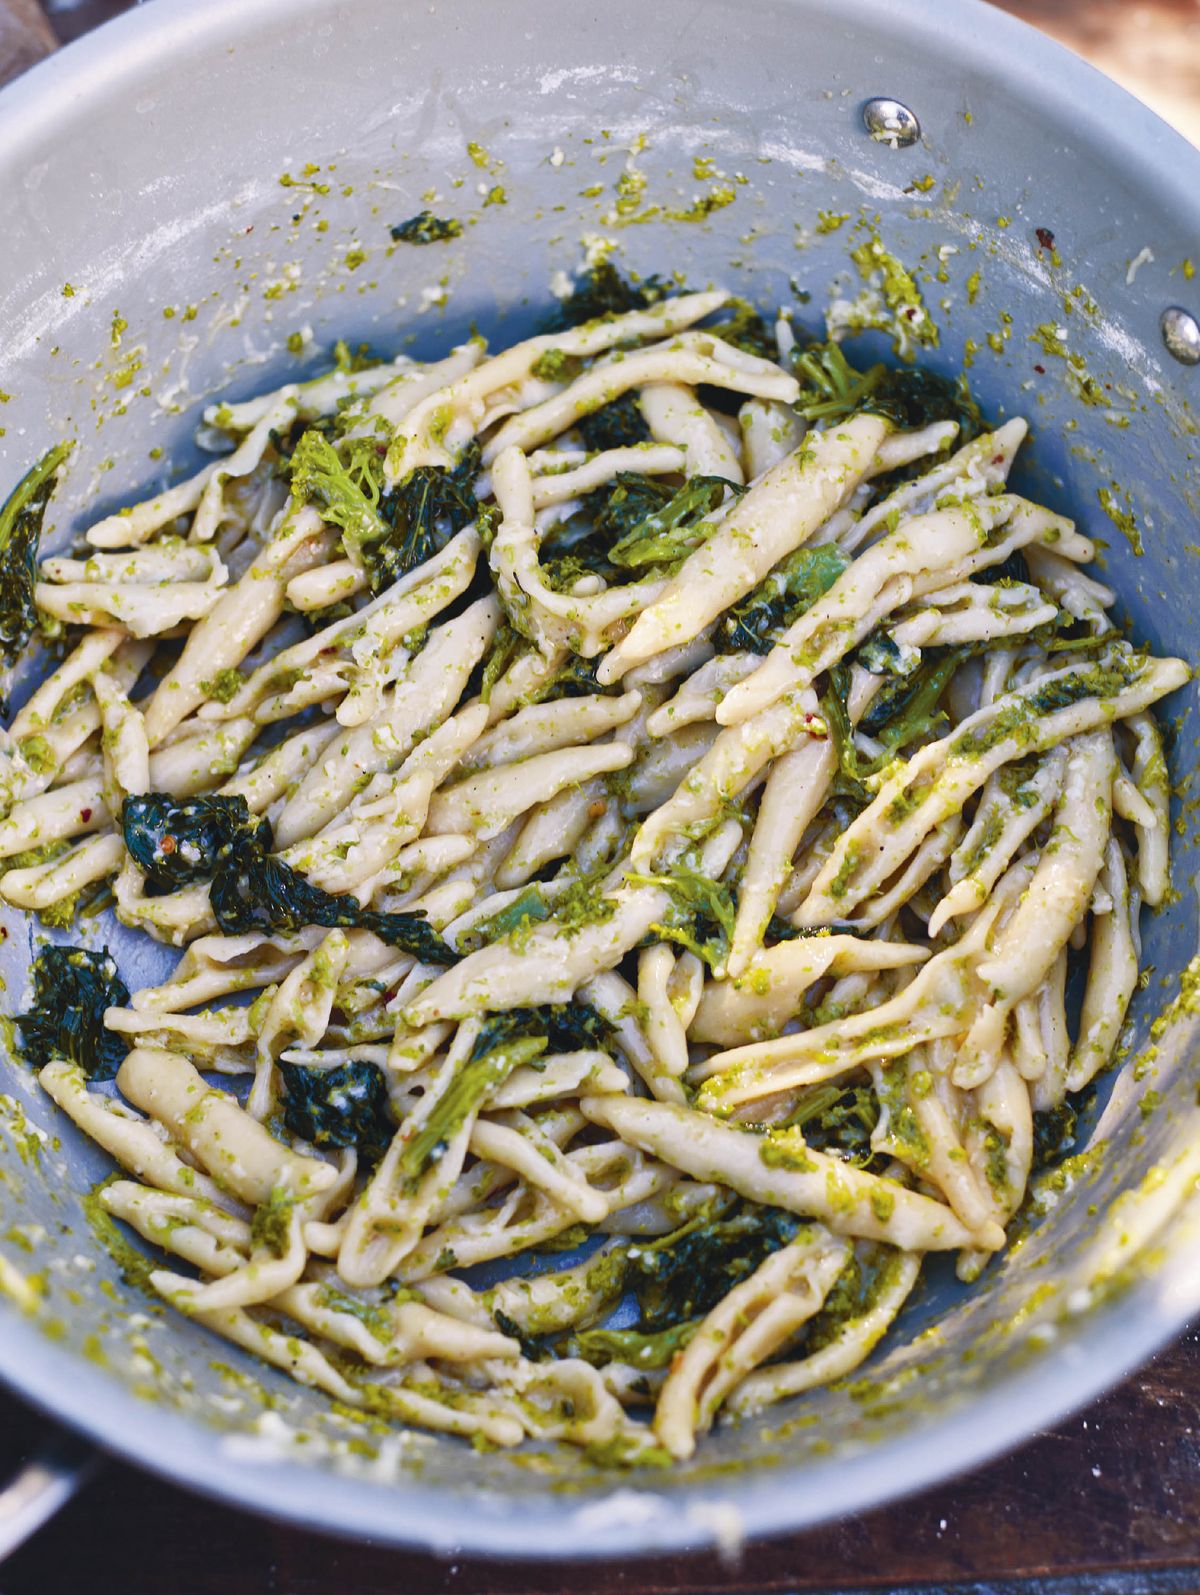 Jamie Oliver’s Corteccia Pasta with Hot Smashed Broccoli, Pecorino, Garlic & Anchovy Pesto